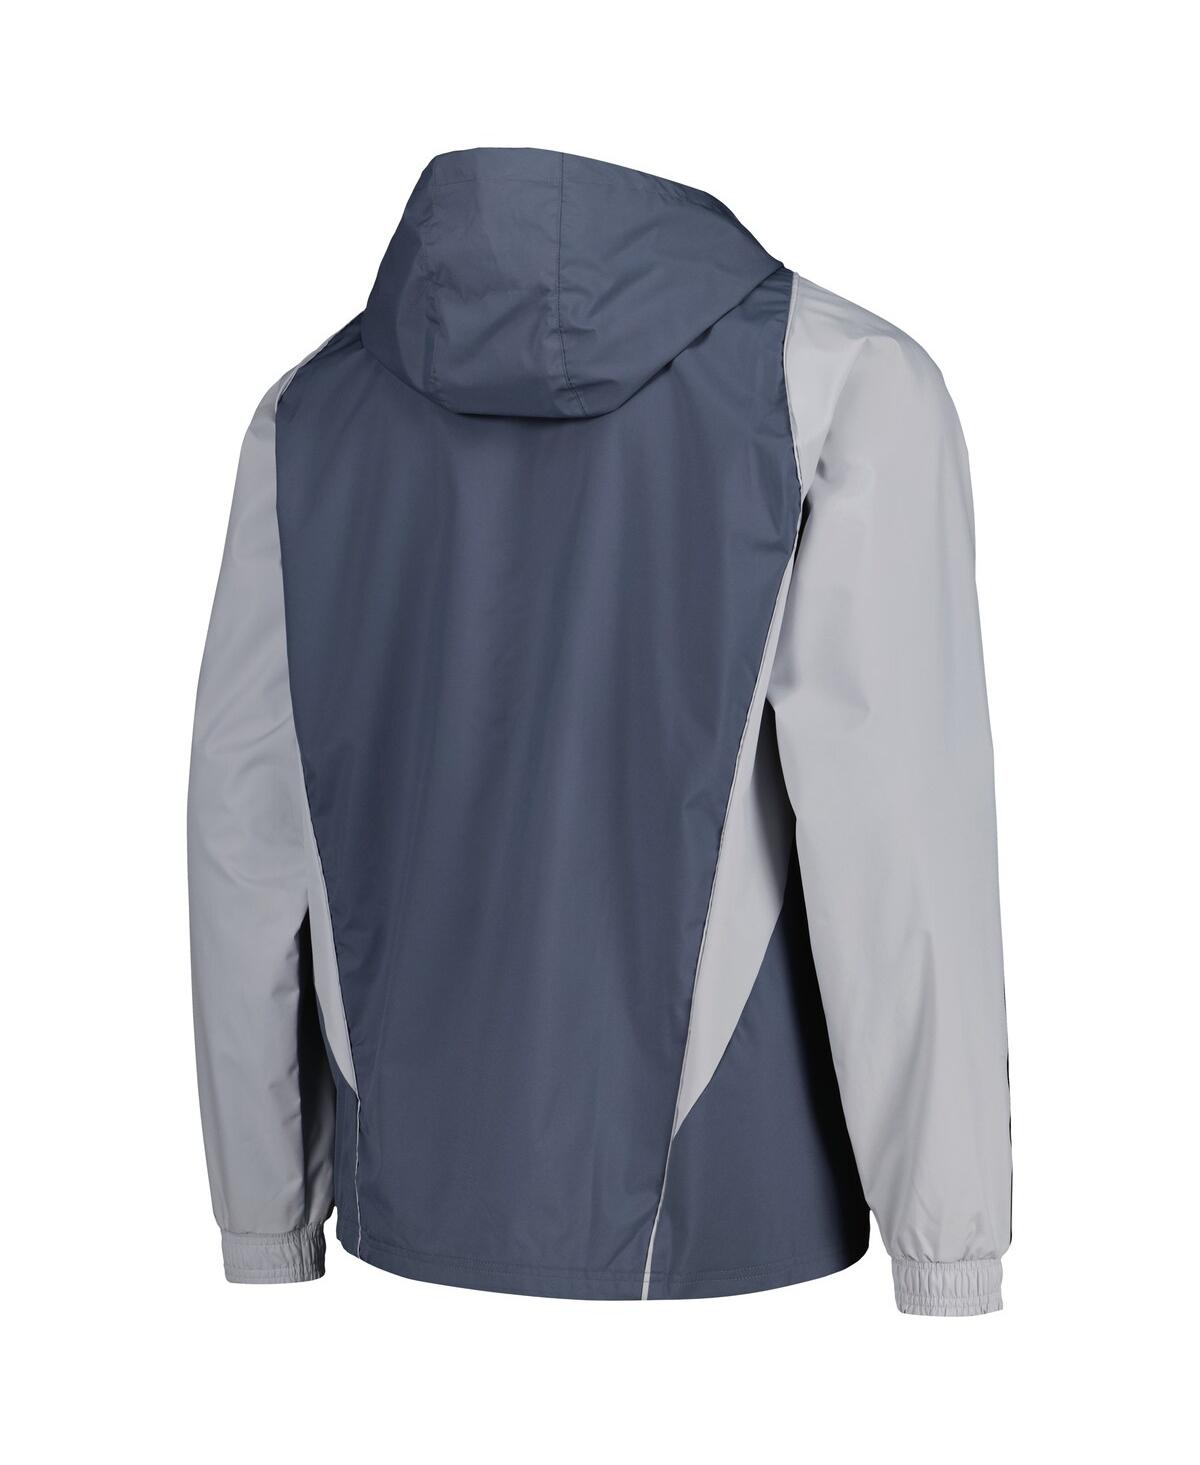 Shop Adidas Originals Men's Adidas Charcoal D.c. United All-weather Raglan Hoodie Full-zip Jacket